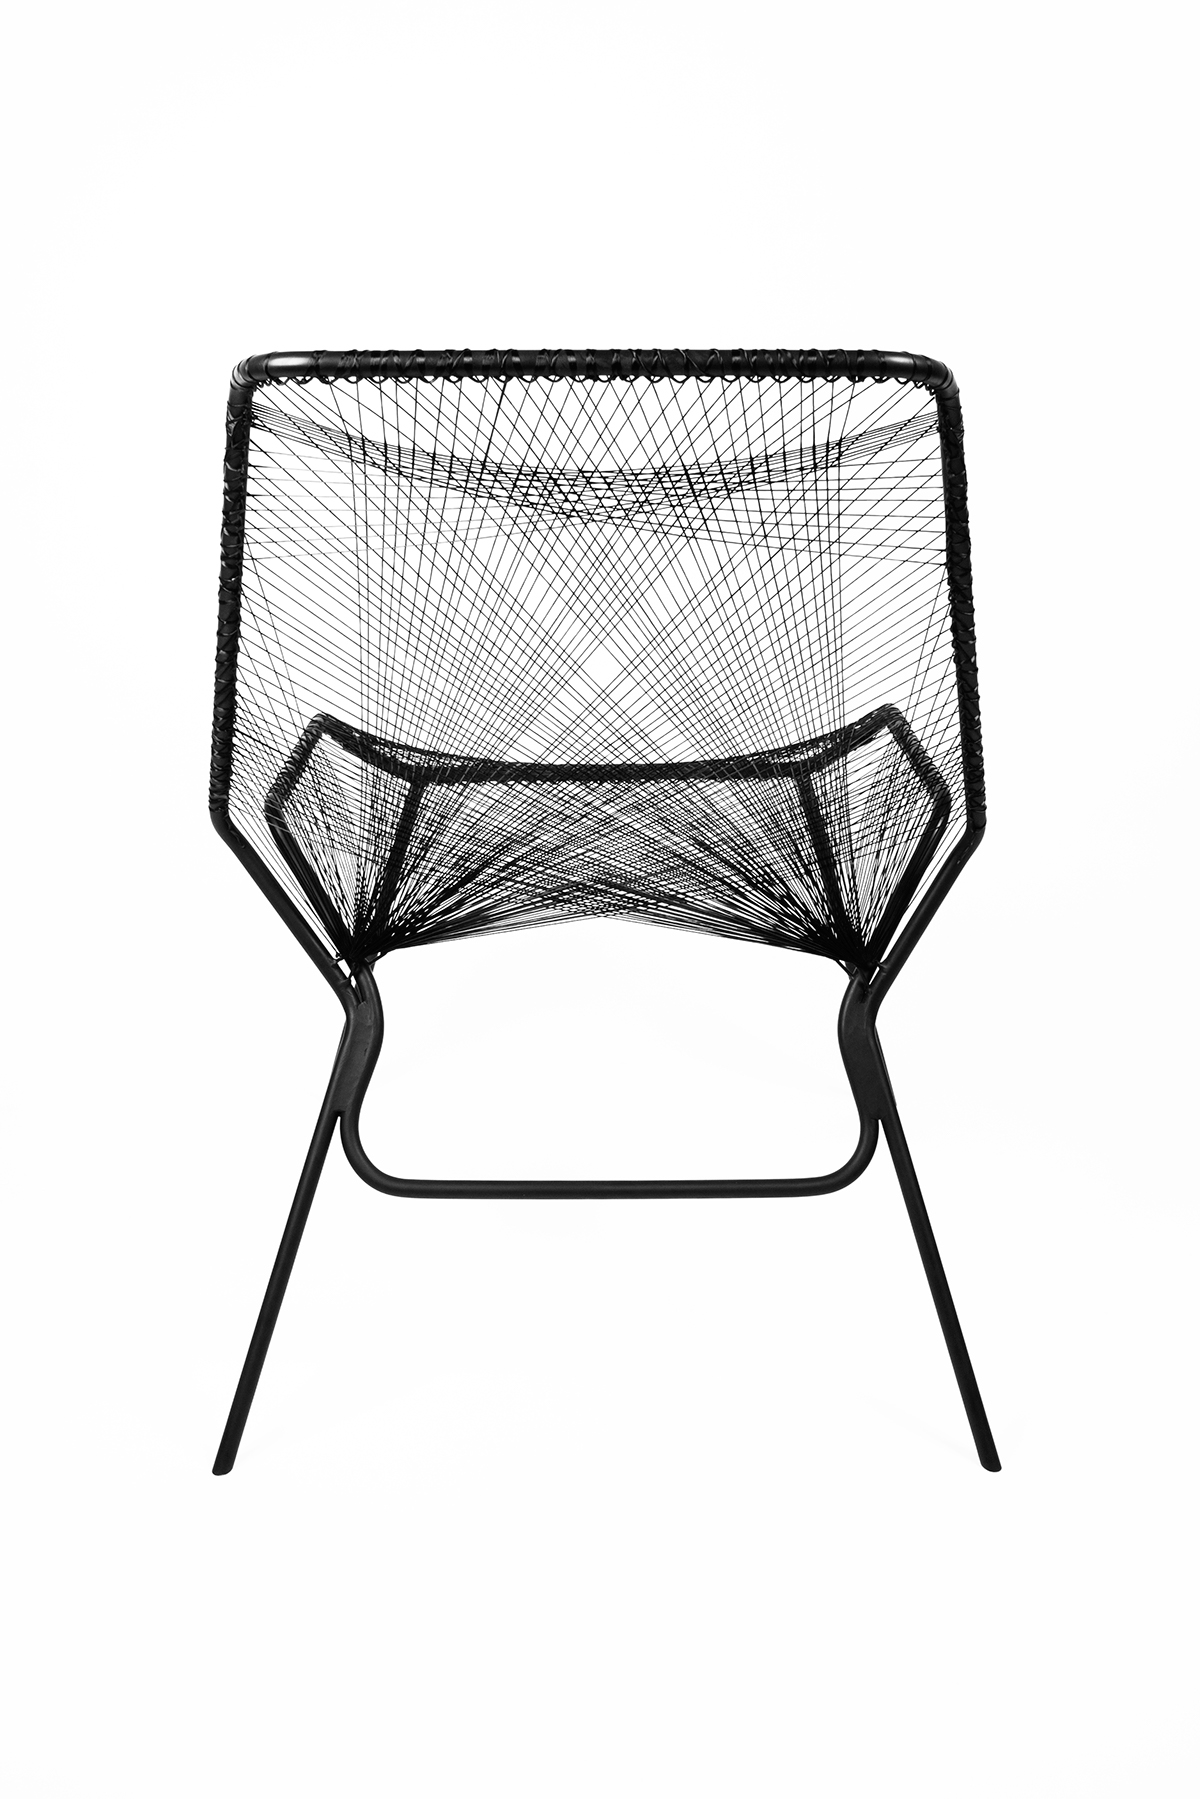 Adobe Portfolio Lounge Chair chair